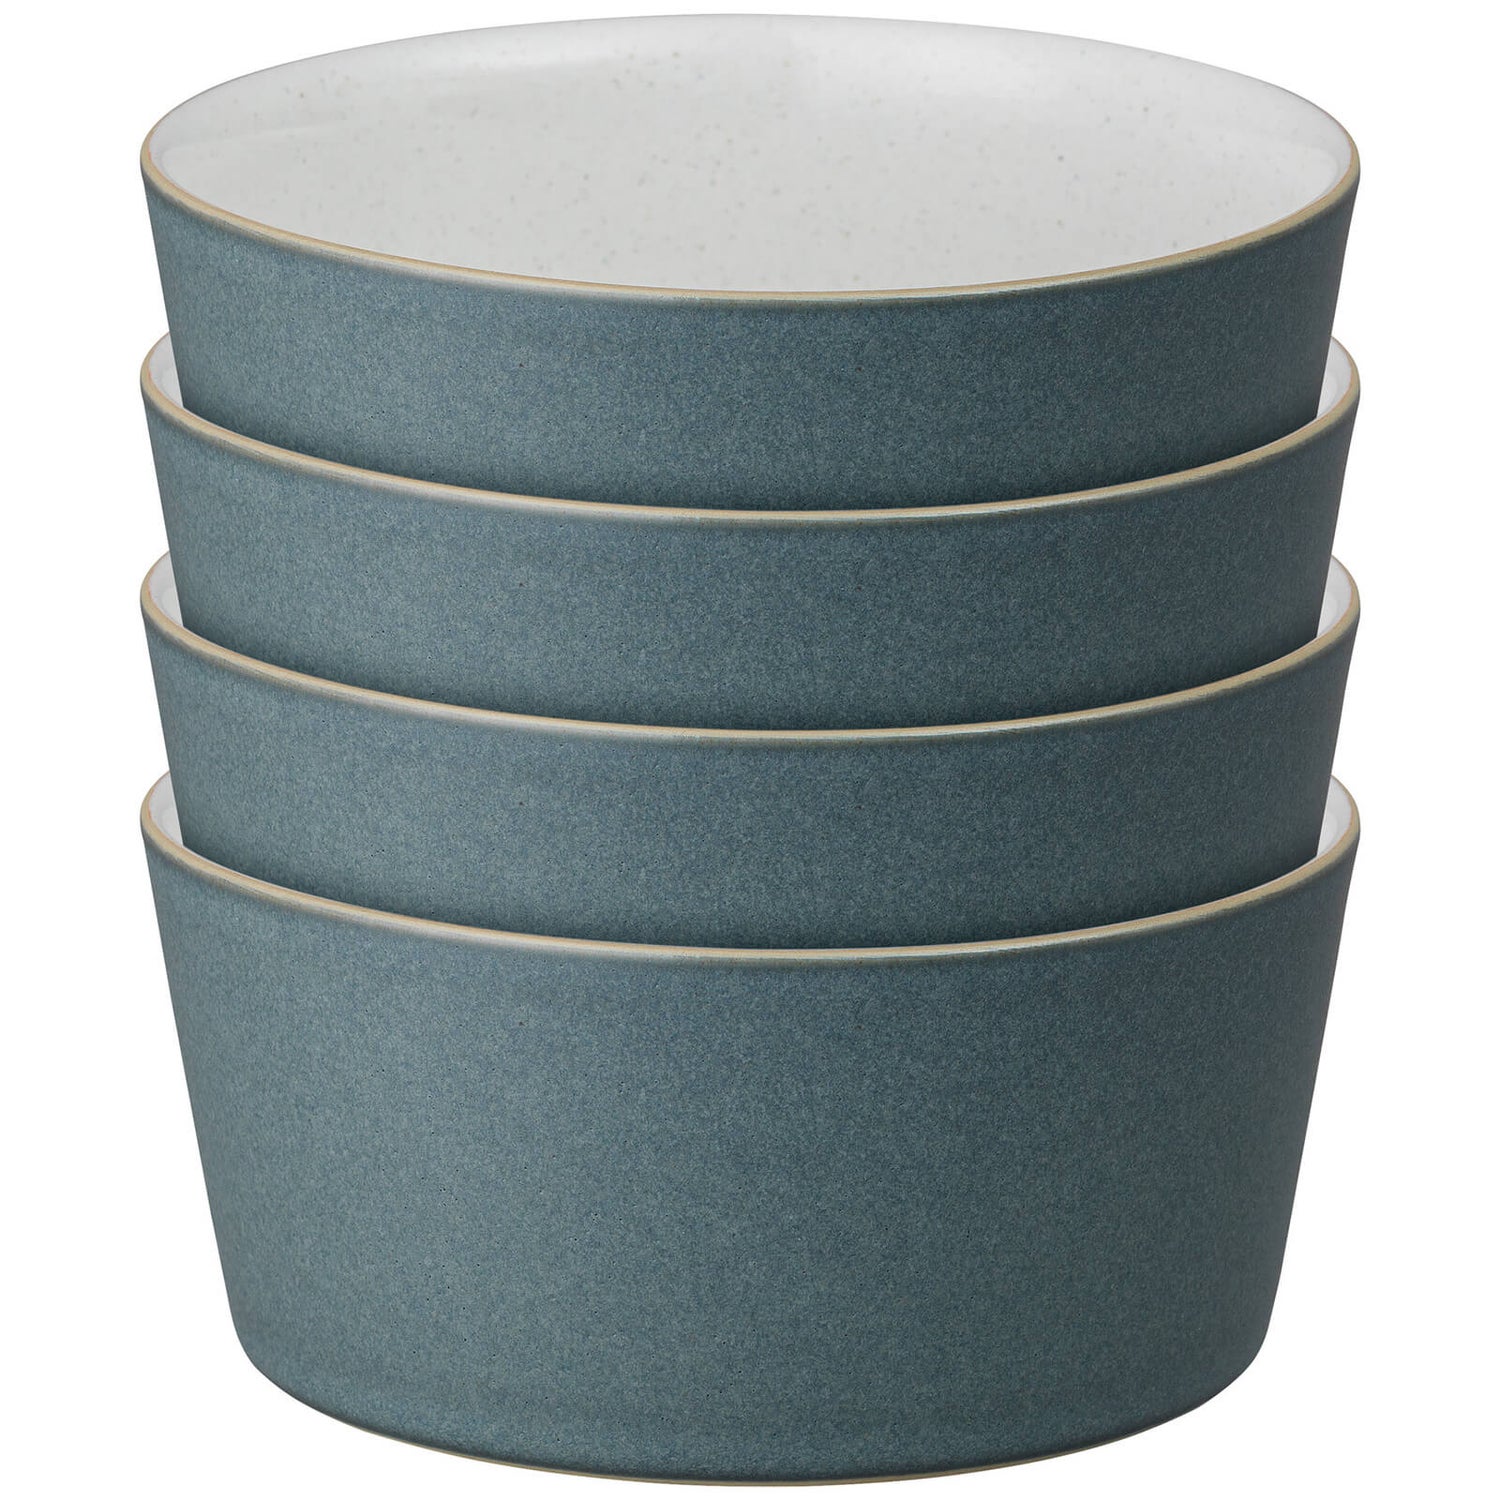 Denby Impression Charcoal Blue Straight Bowls (Set of 4)